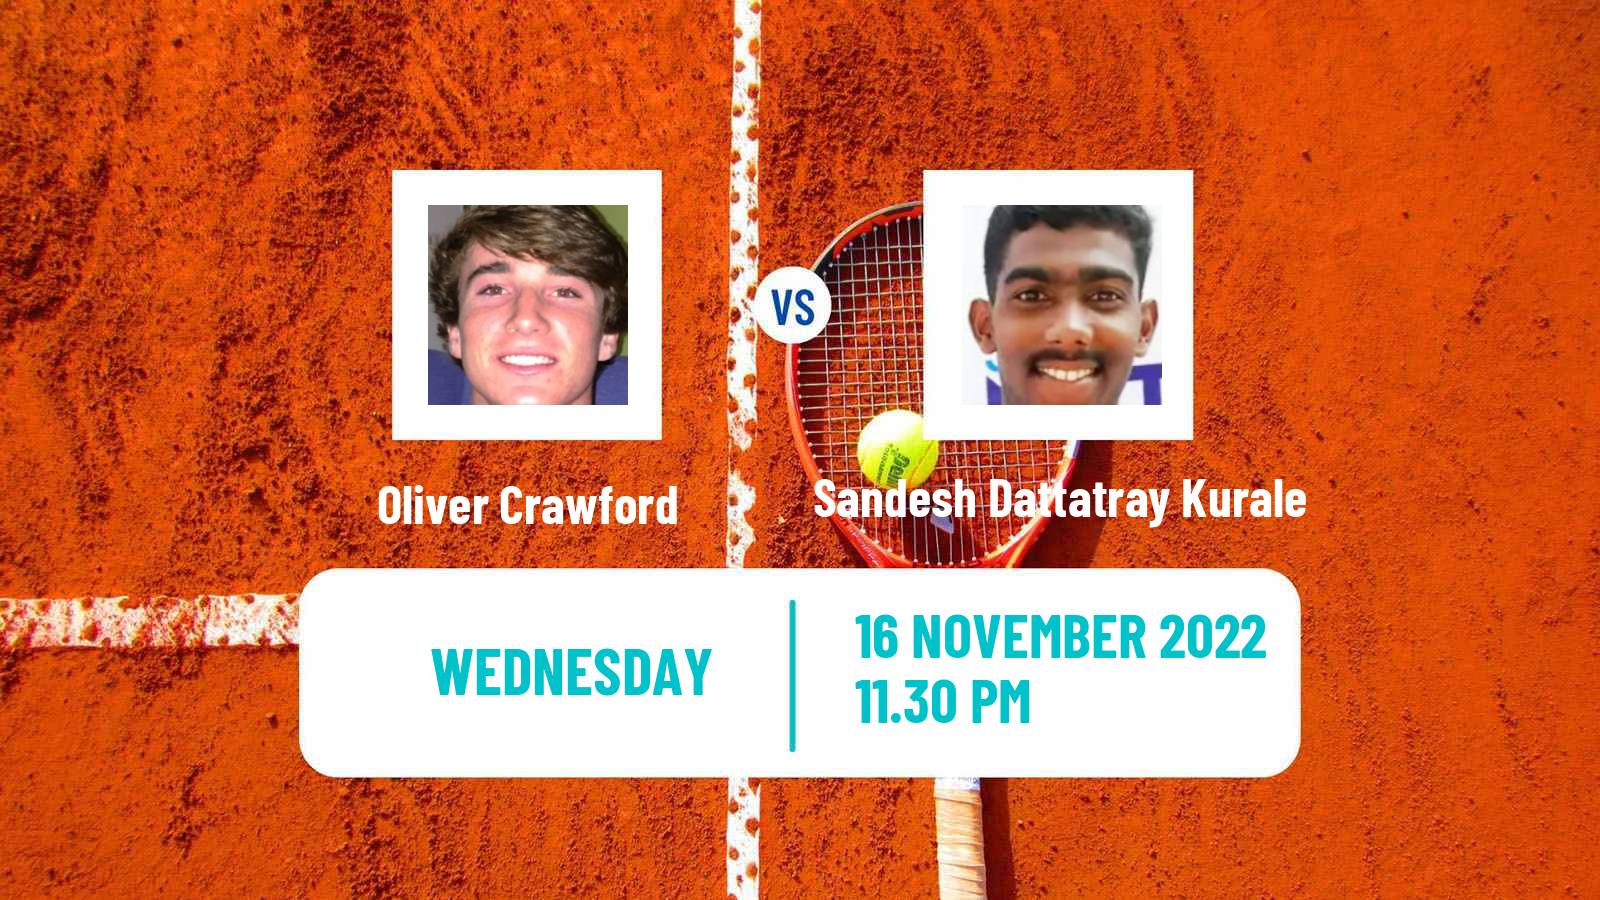 Tennis ITF Tournaments Oliver Crawford - Sandesh Dattatray Kurale